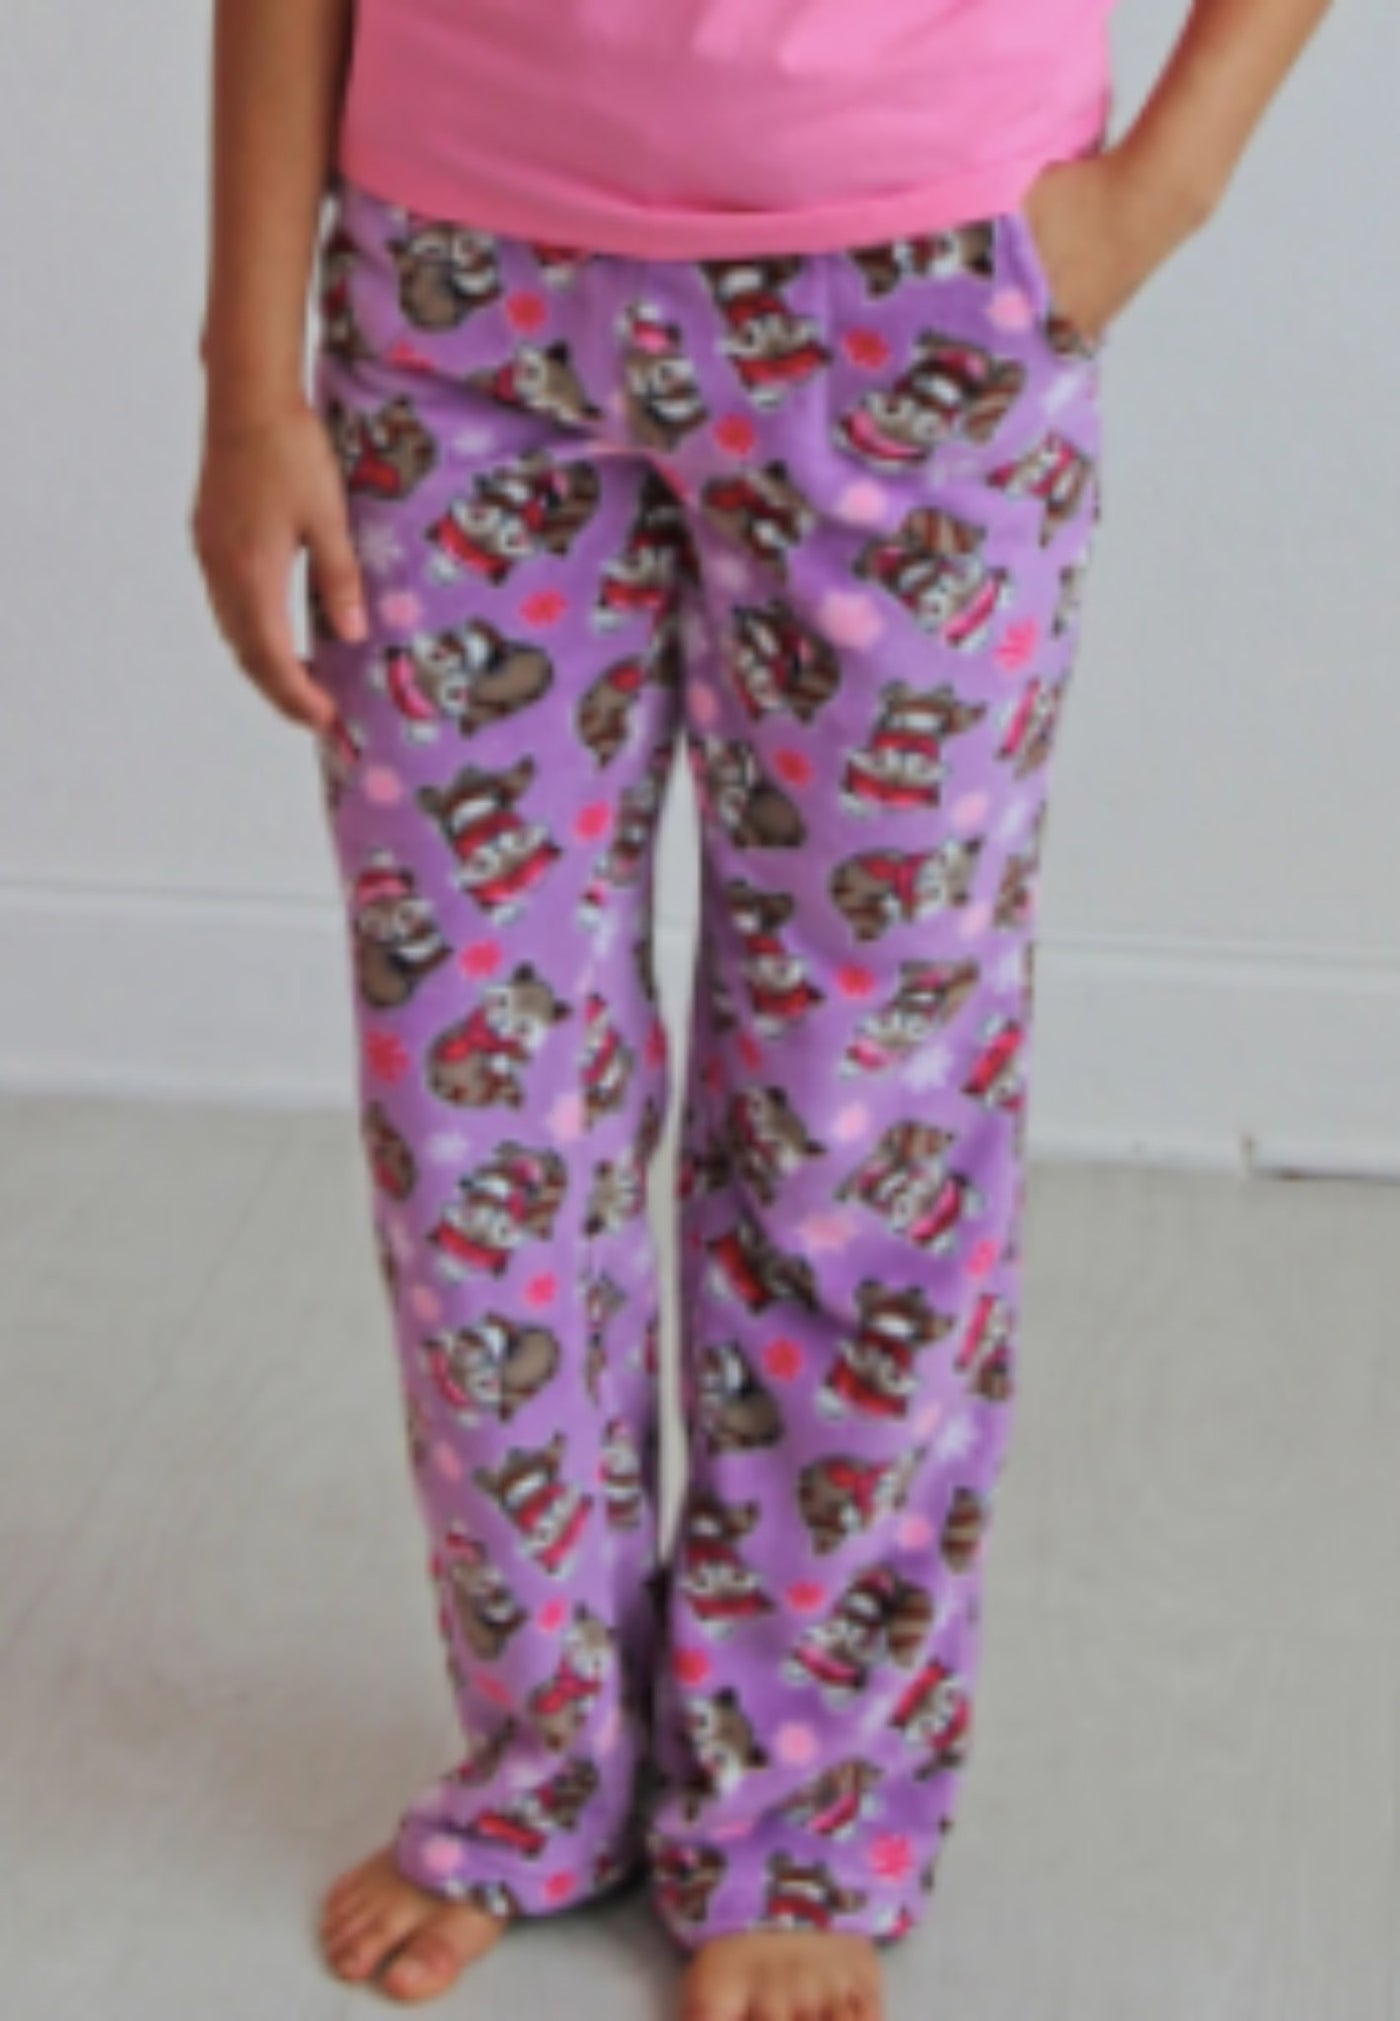 Candy Pink Girls Fleece Pajama Pants in Donut Dreams Pattern